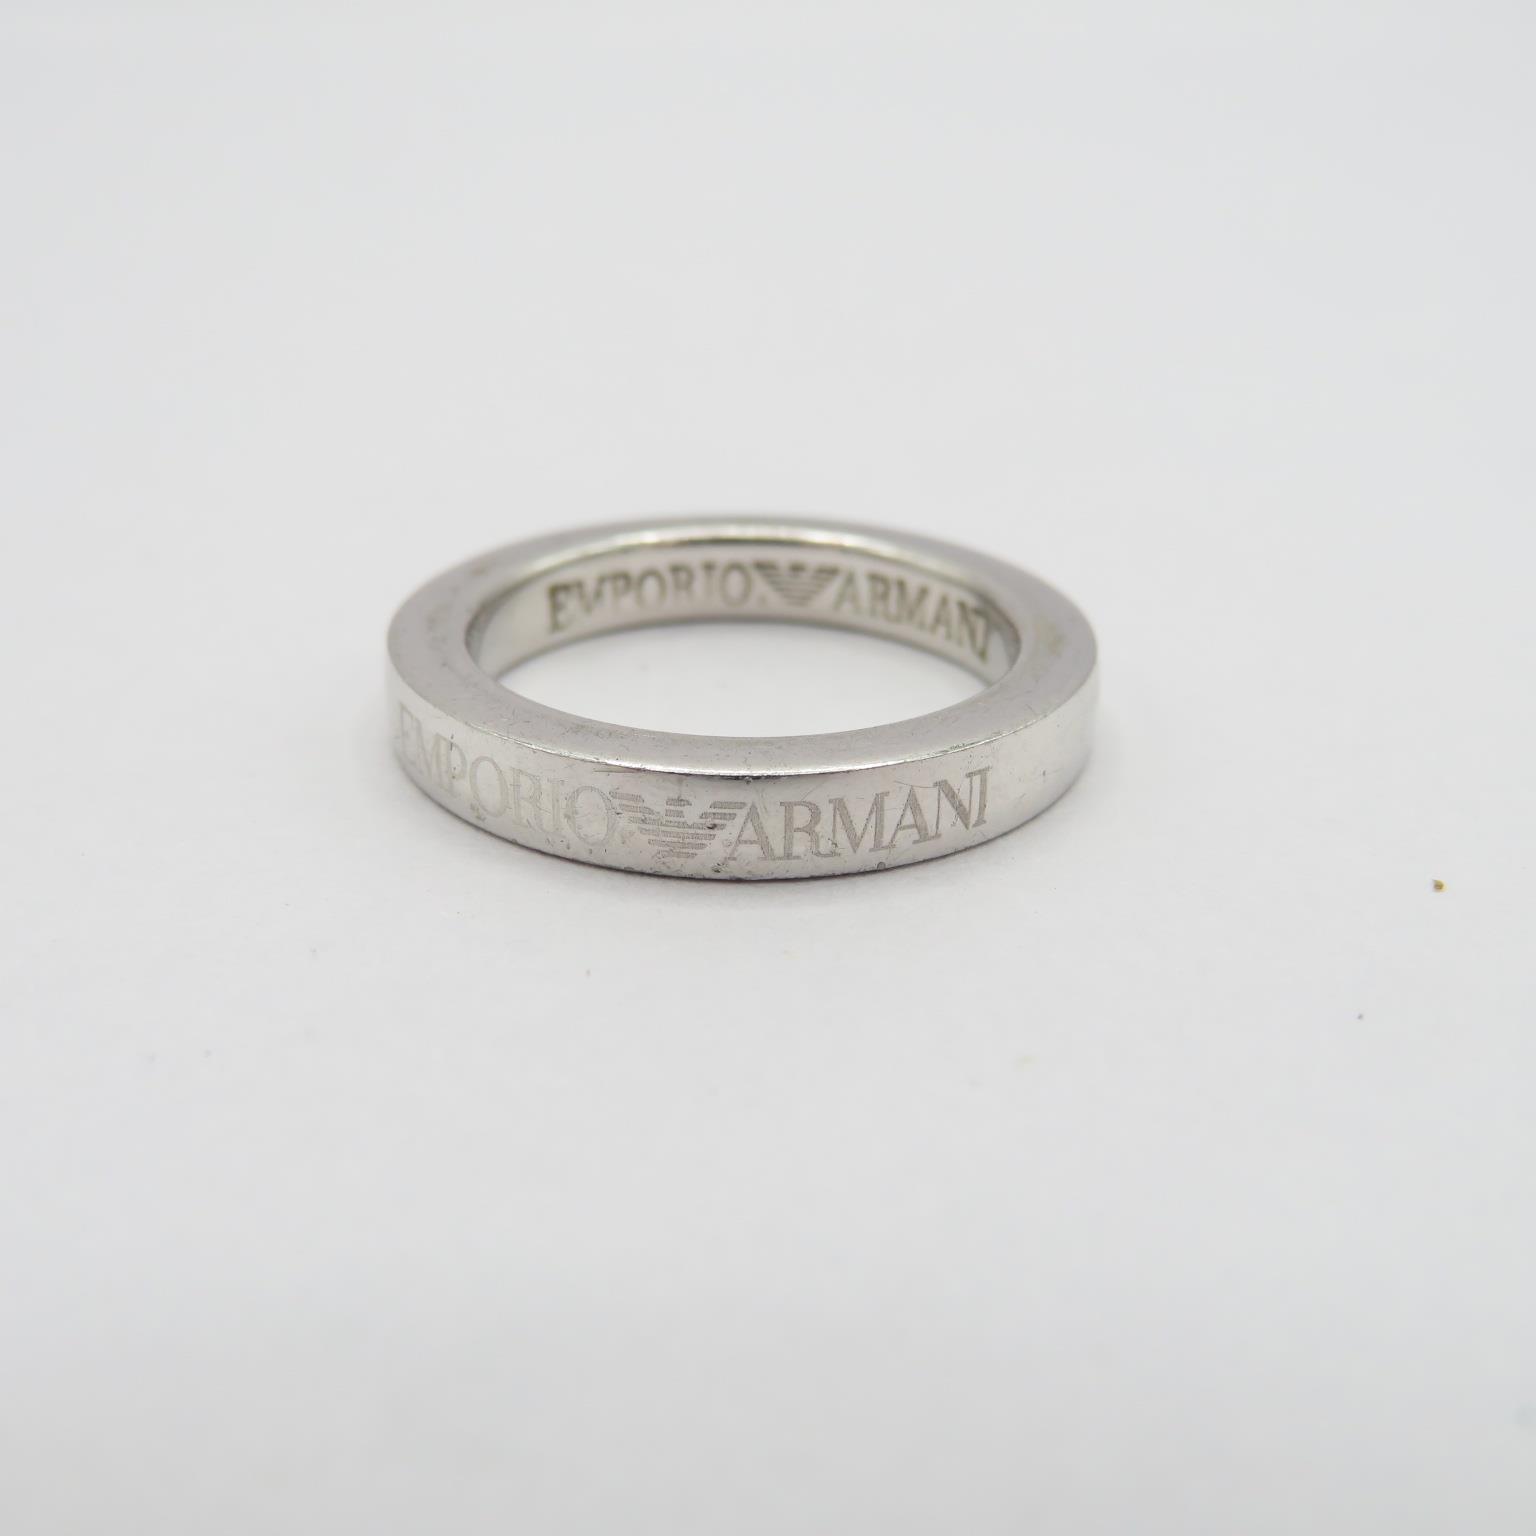 Three silver rings by designer Emporio Armani (15g) - Image 7 of 8